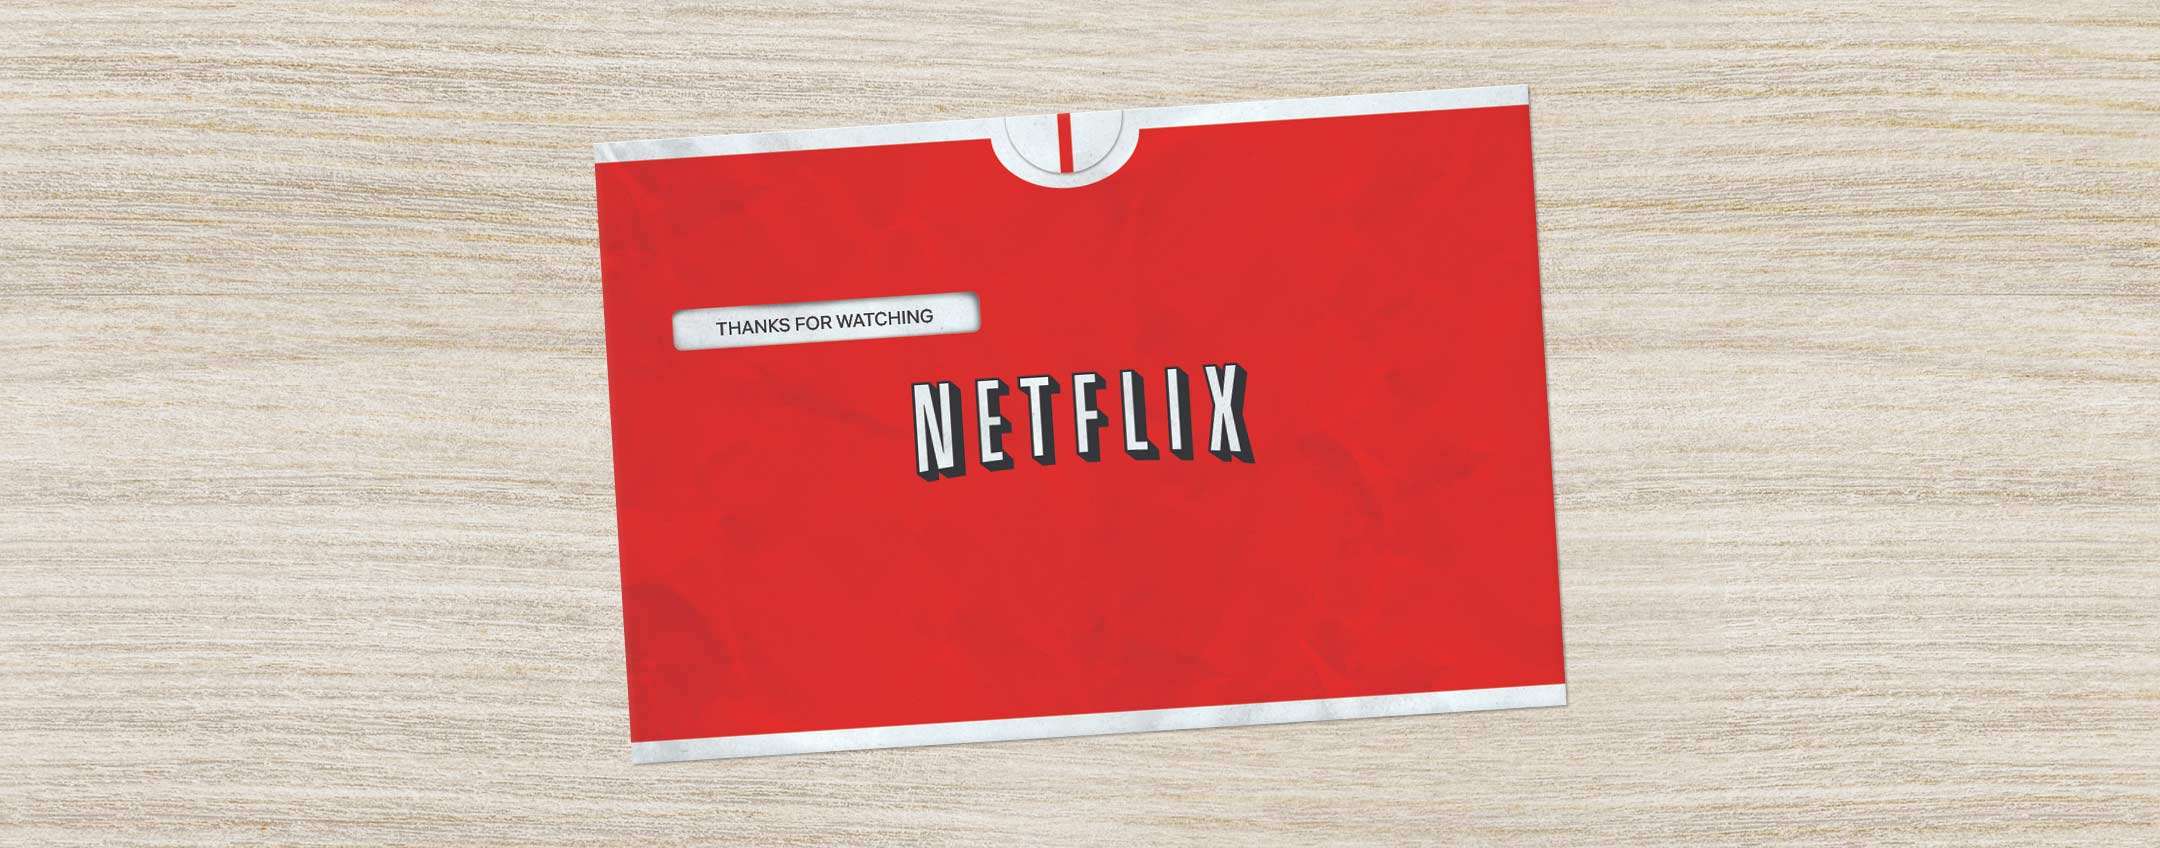 Netflix, entre contas compartilhadas e o último DVD